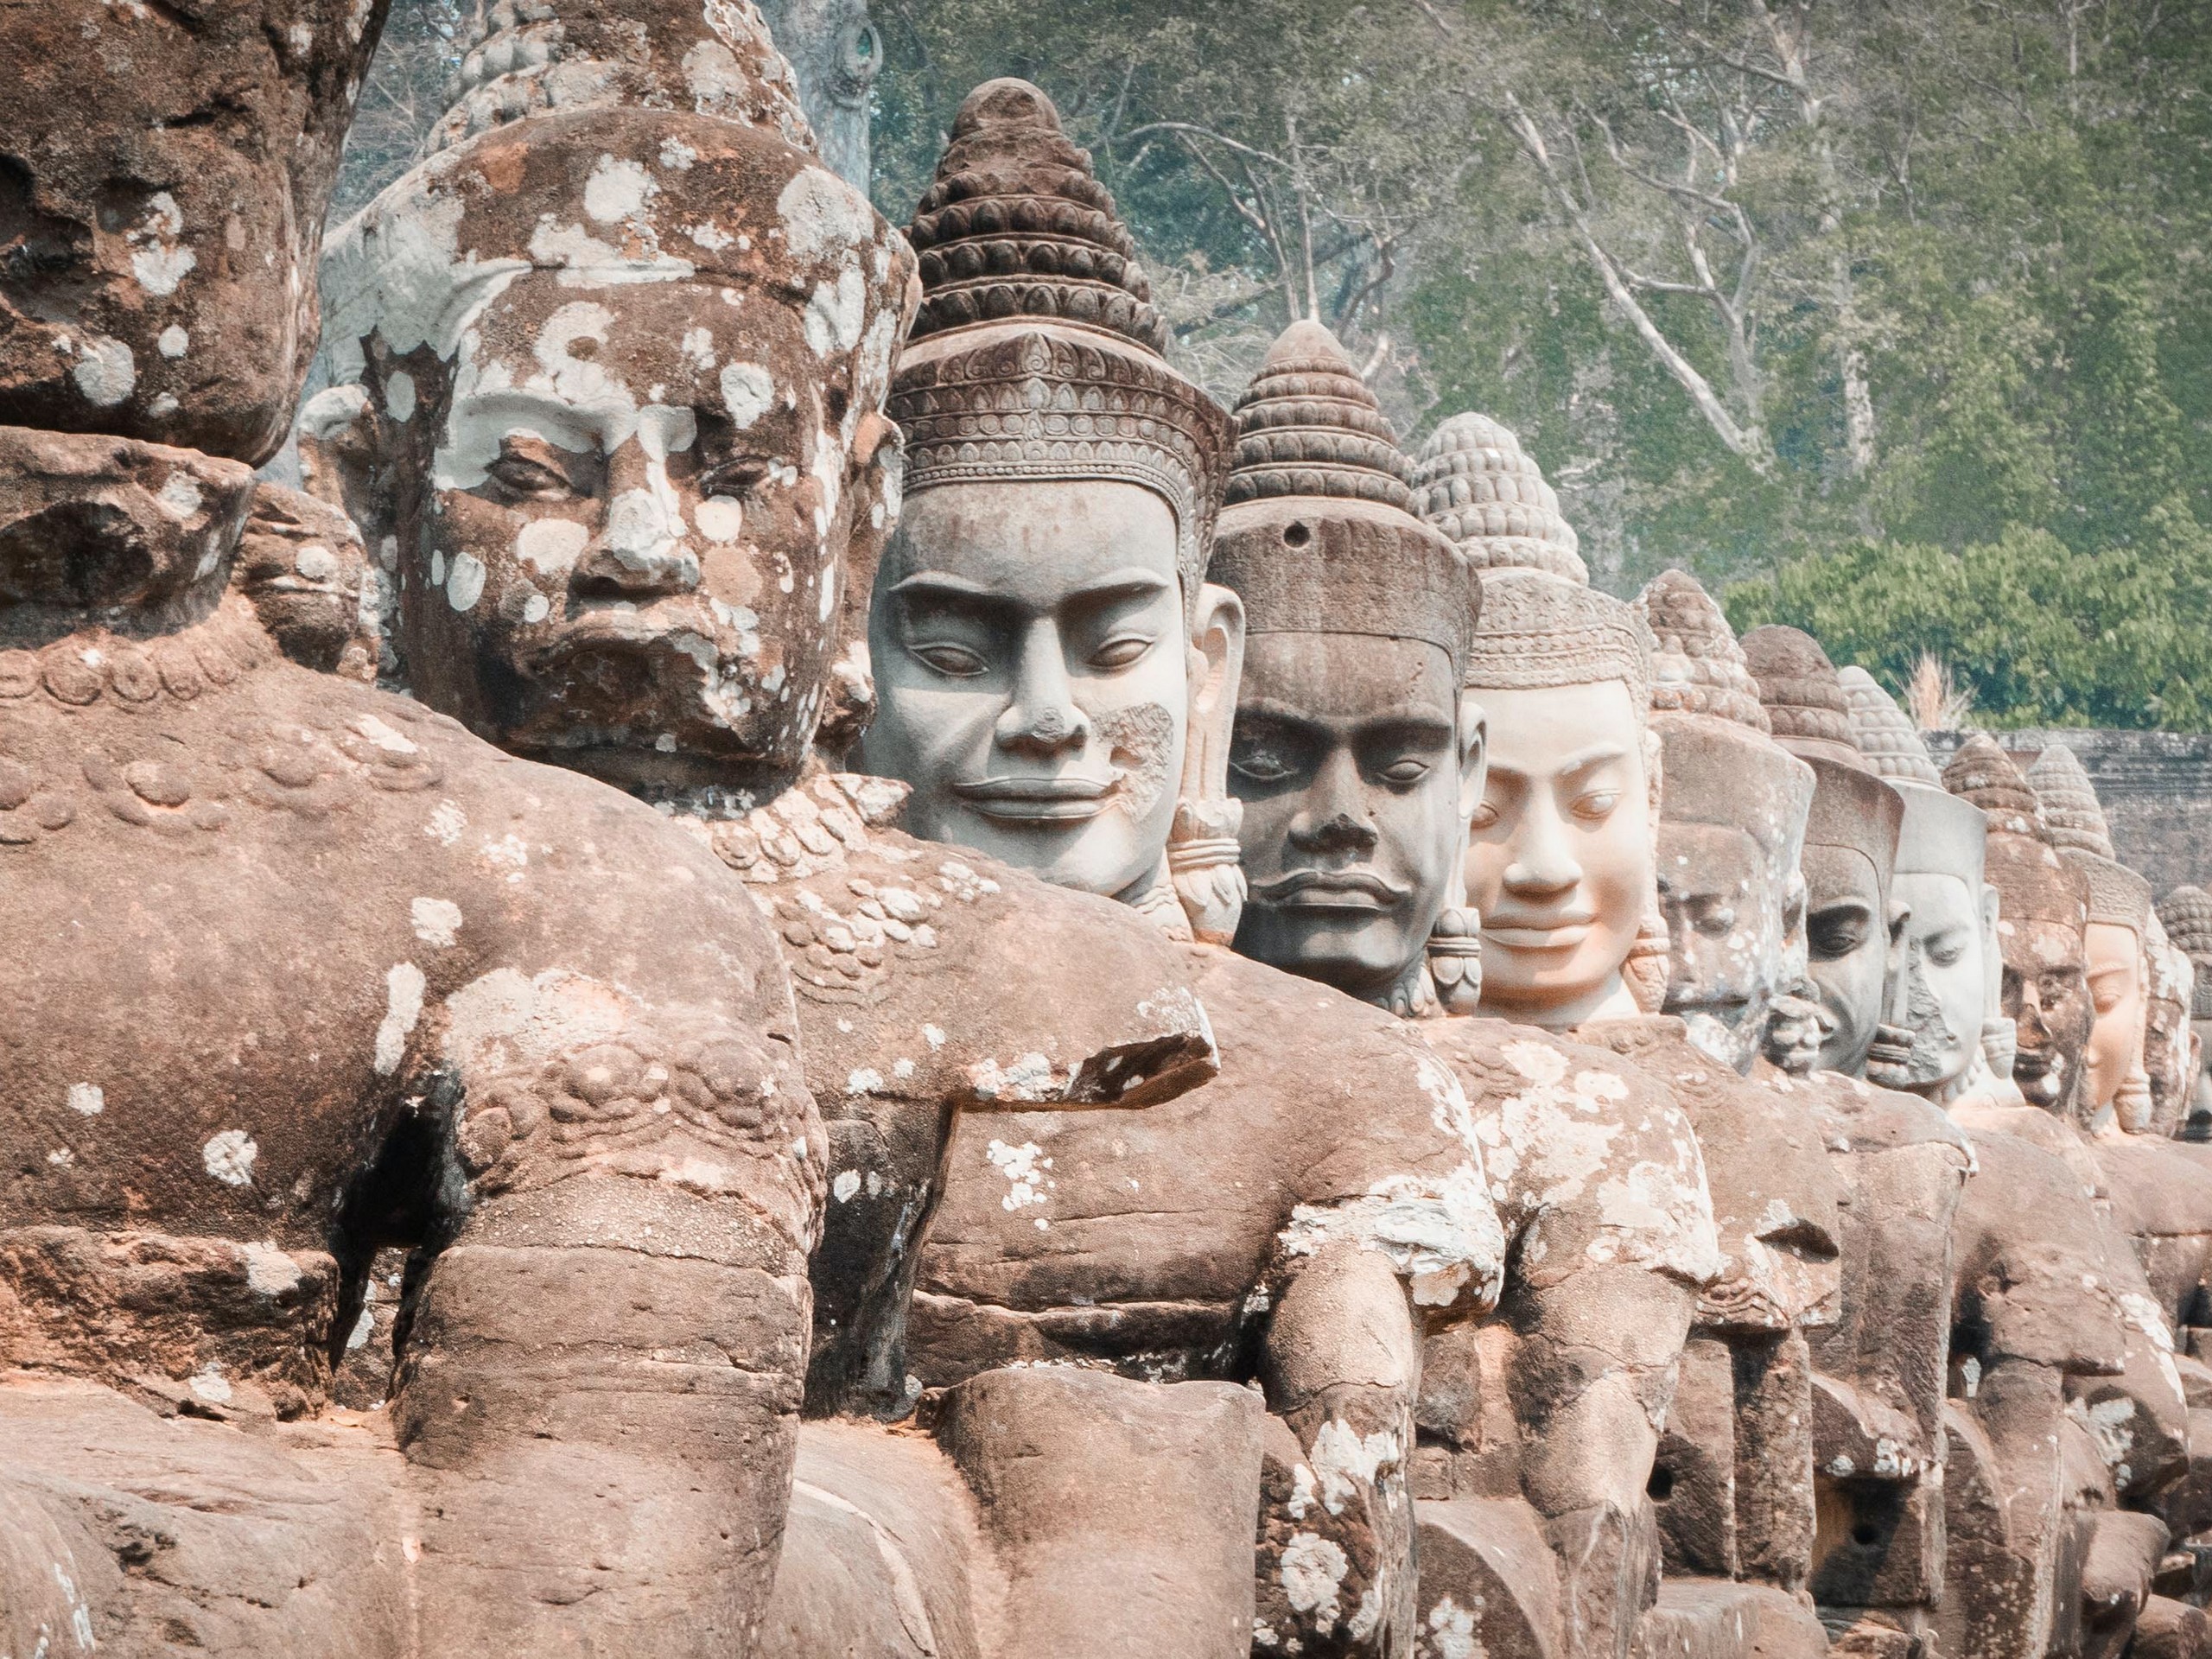 Stone sculptures in Angkor Wat